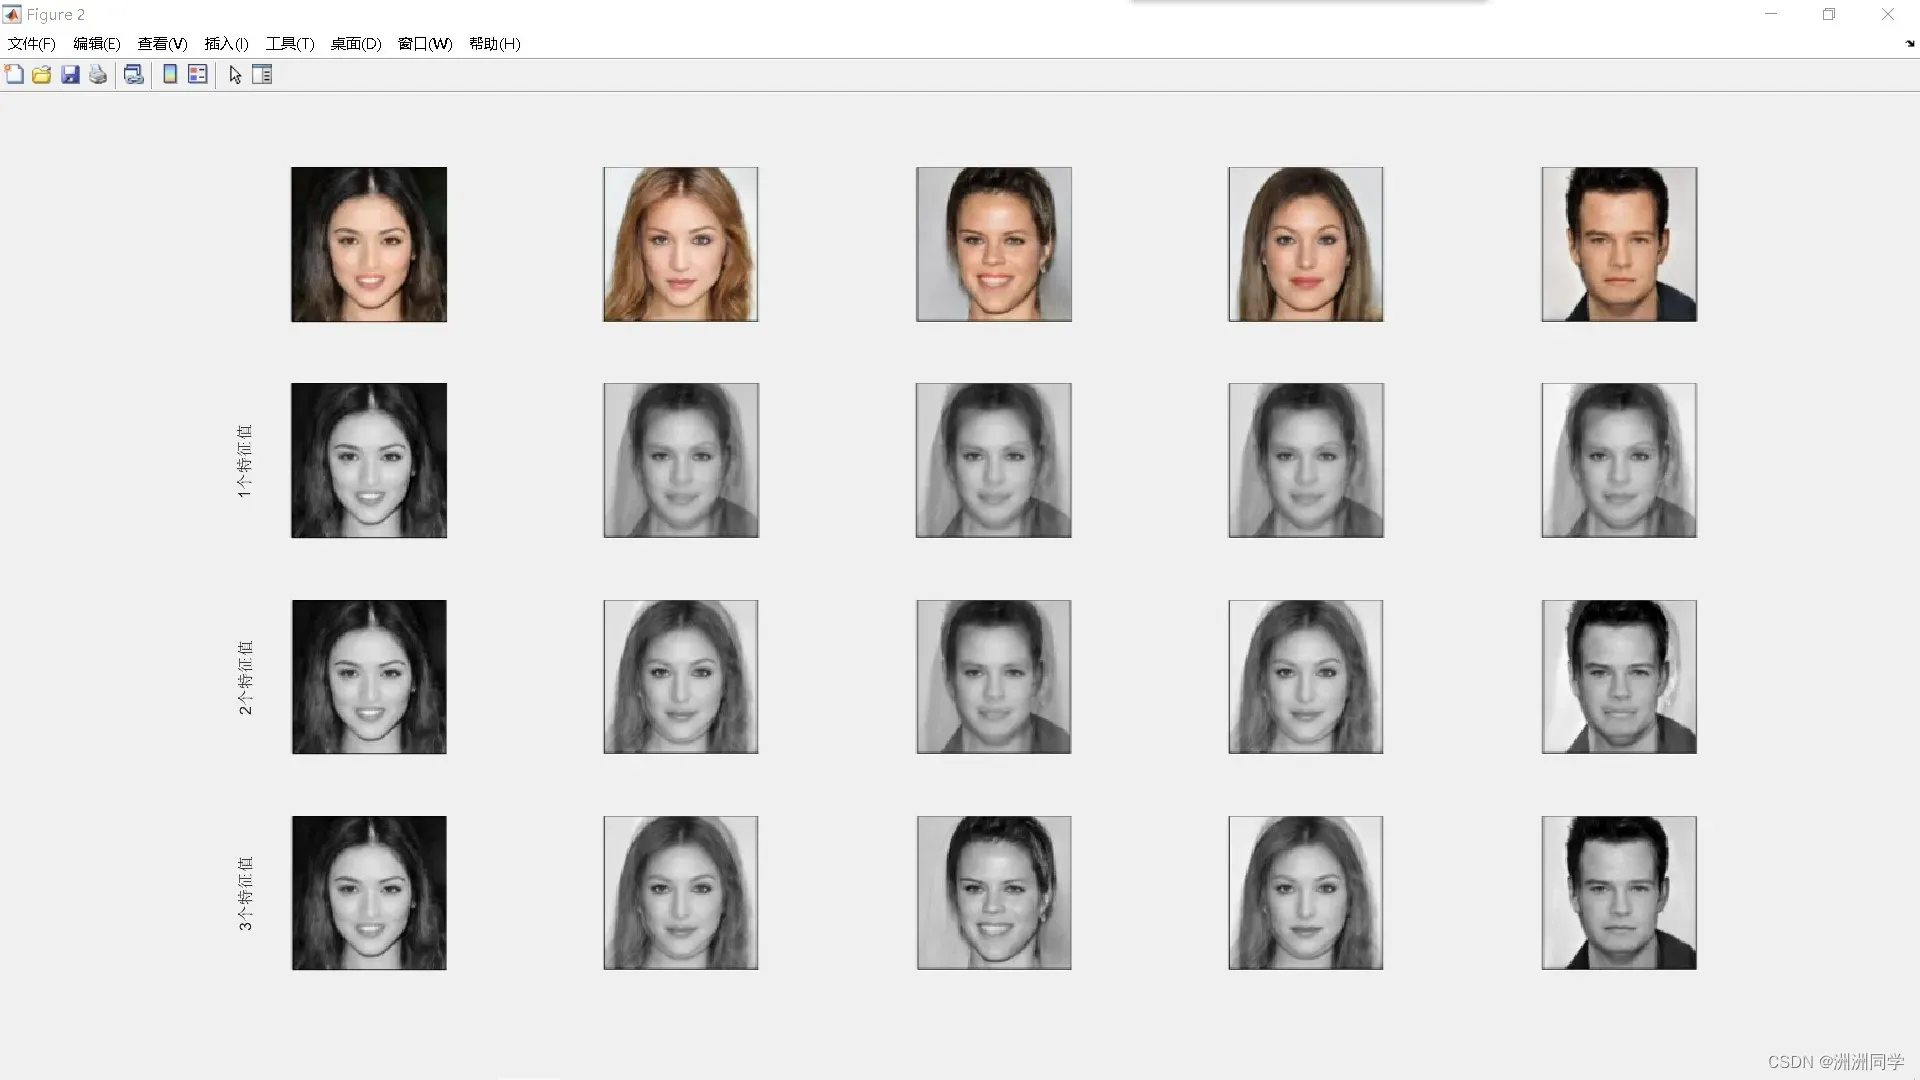 PCA主成分分析——重构人脸图像（MATLAB）